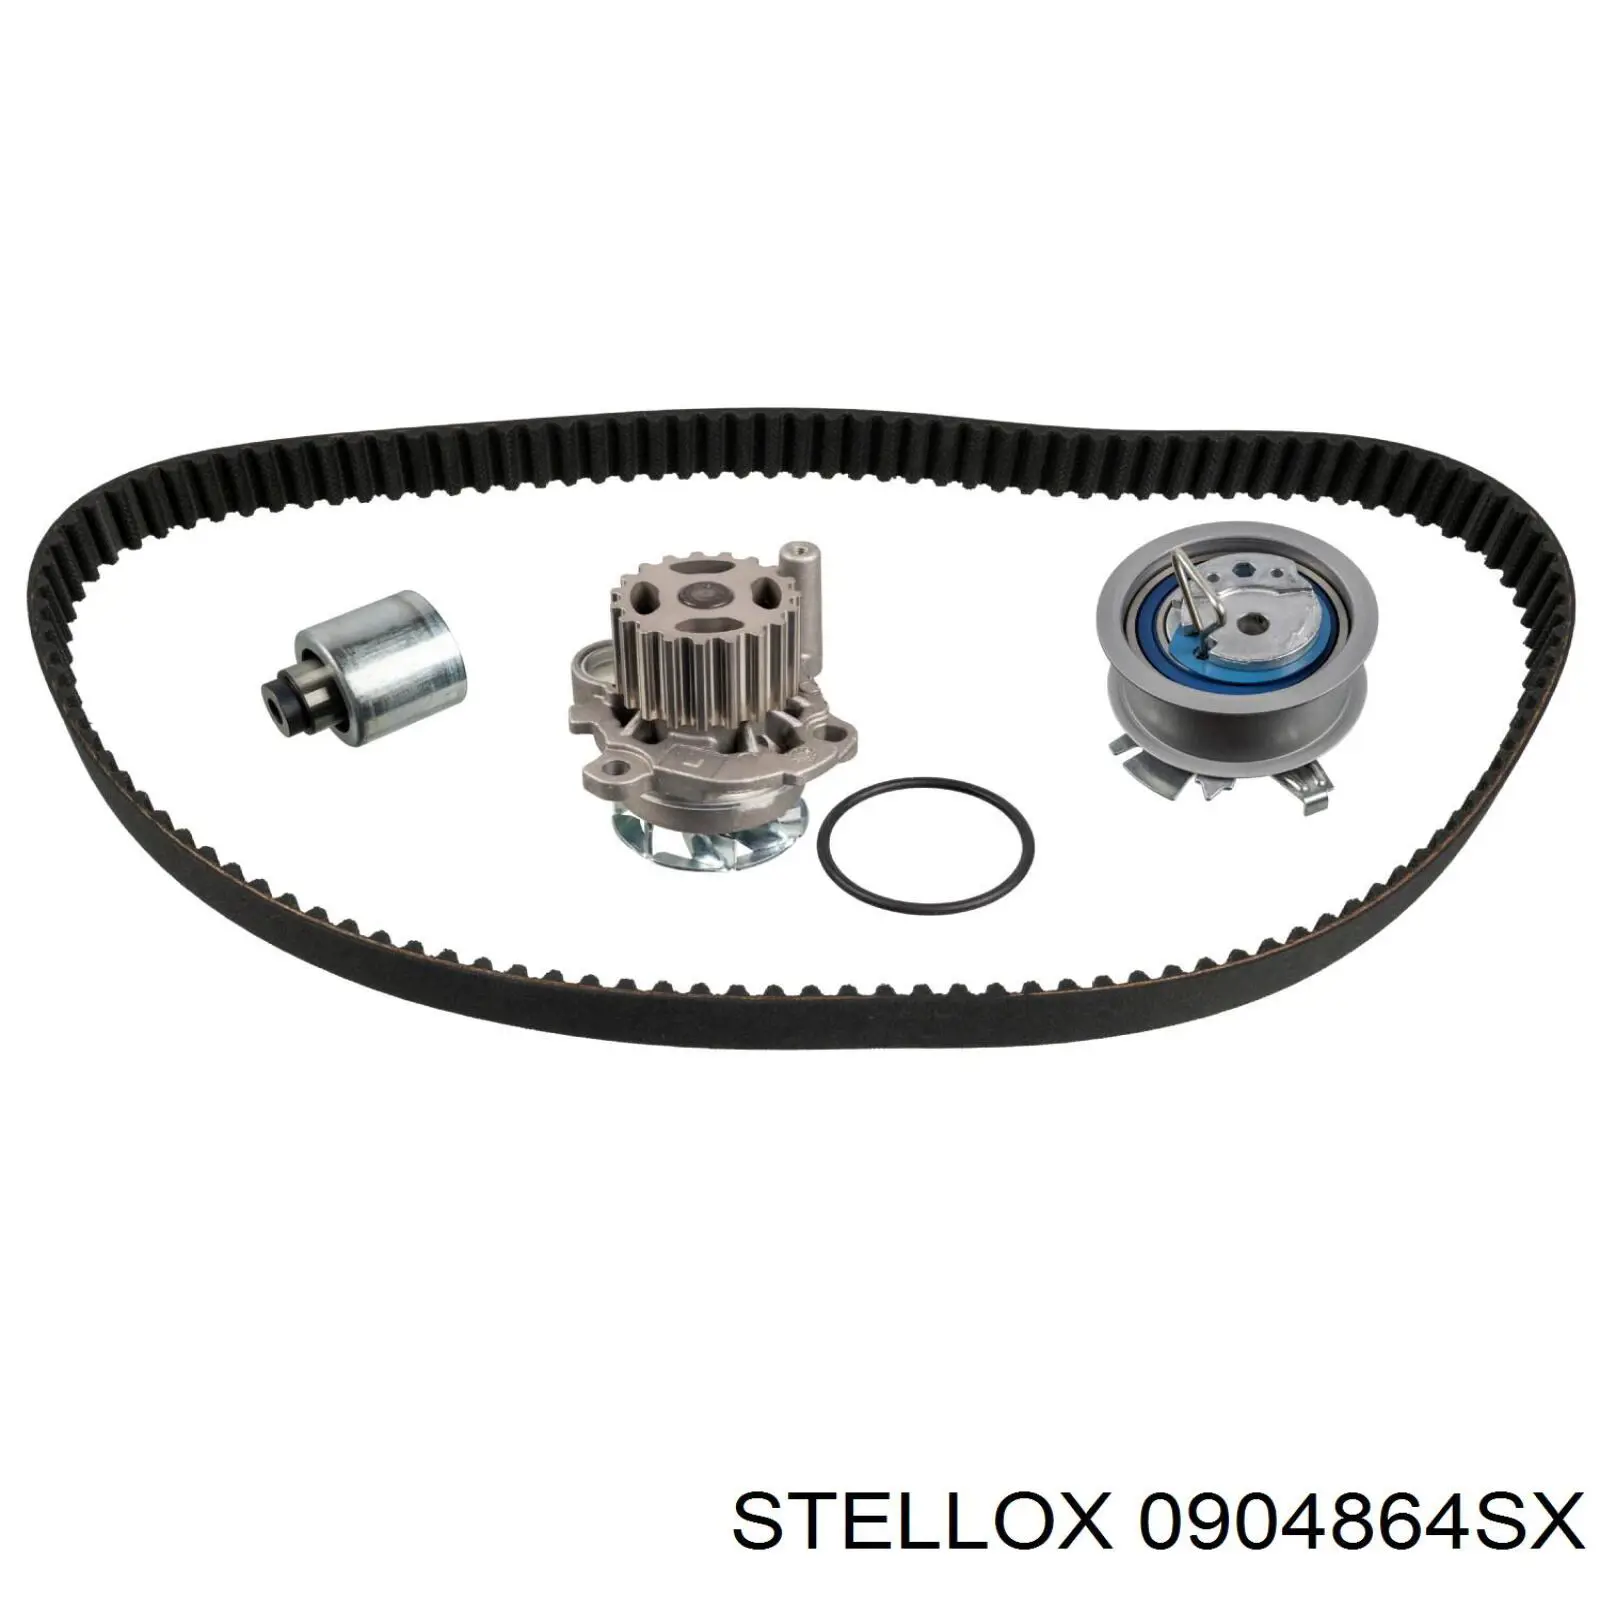 09-04864-SX Stellox ремень грм